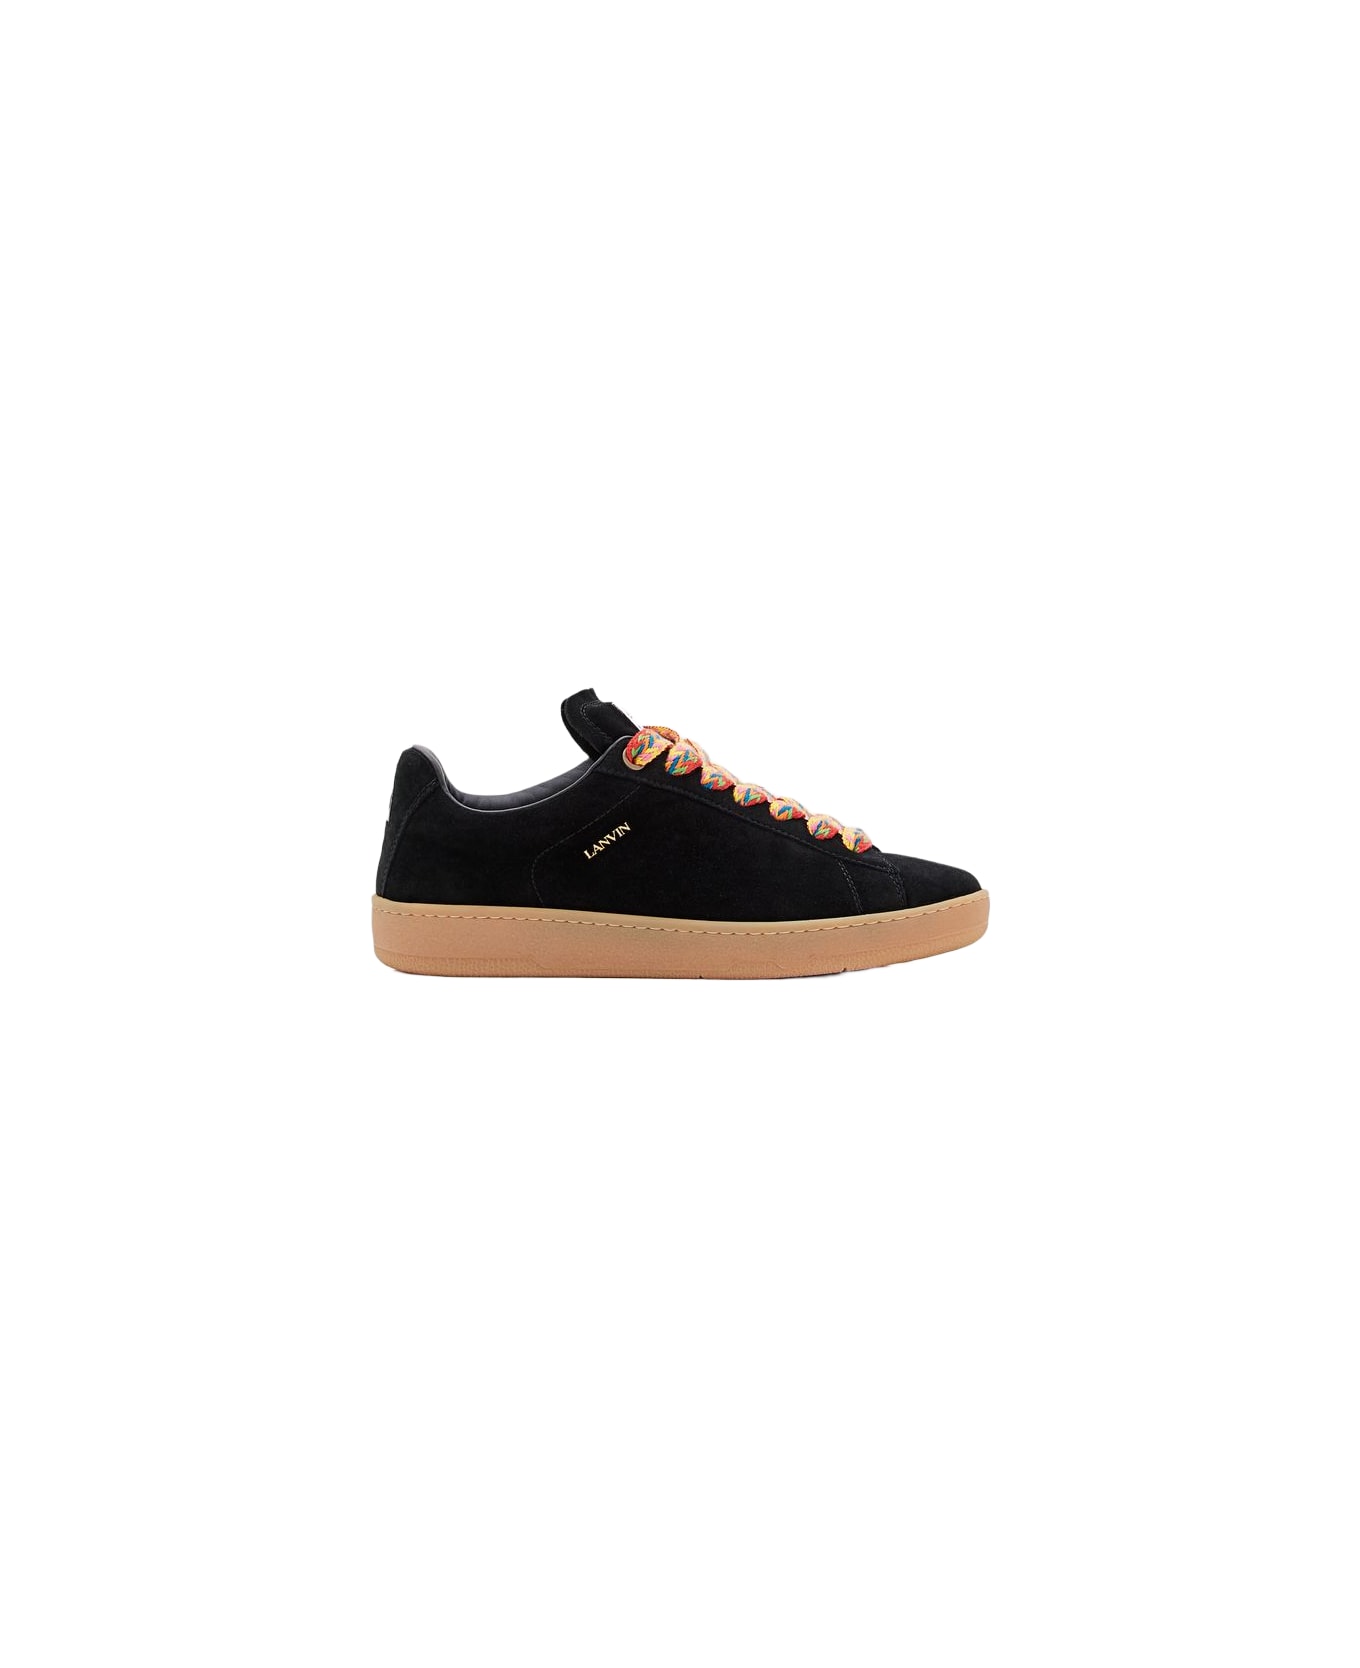 Lanvin Lite Curb Low Top Sneakers - Black スニーカー